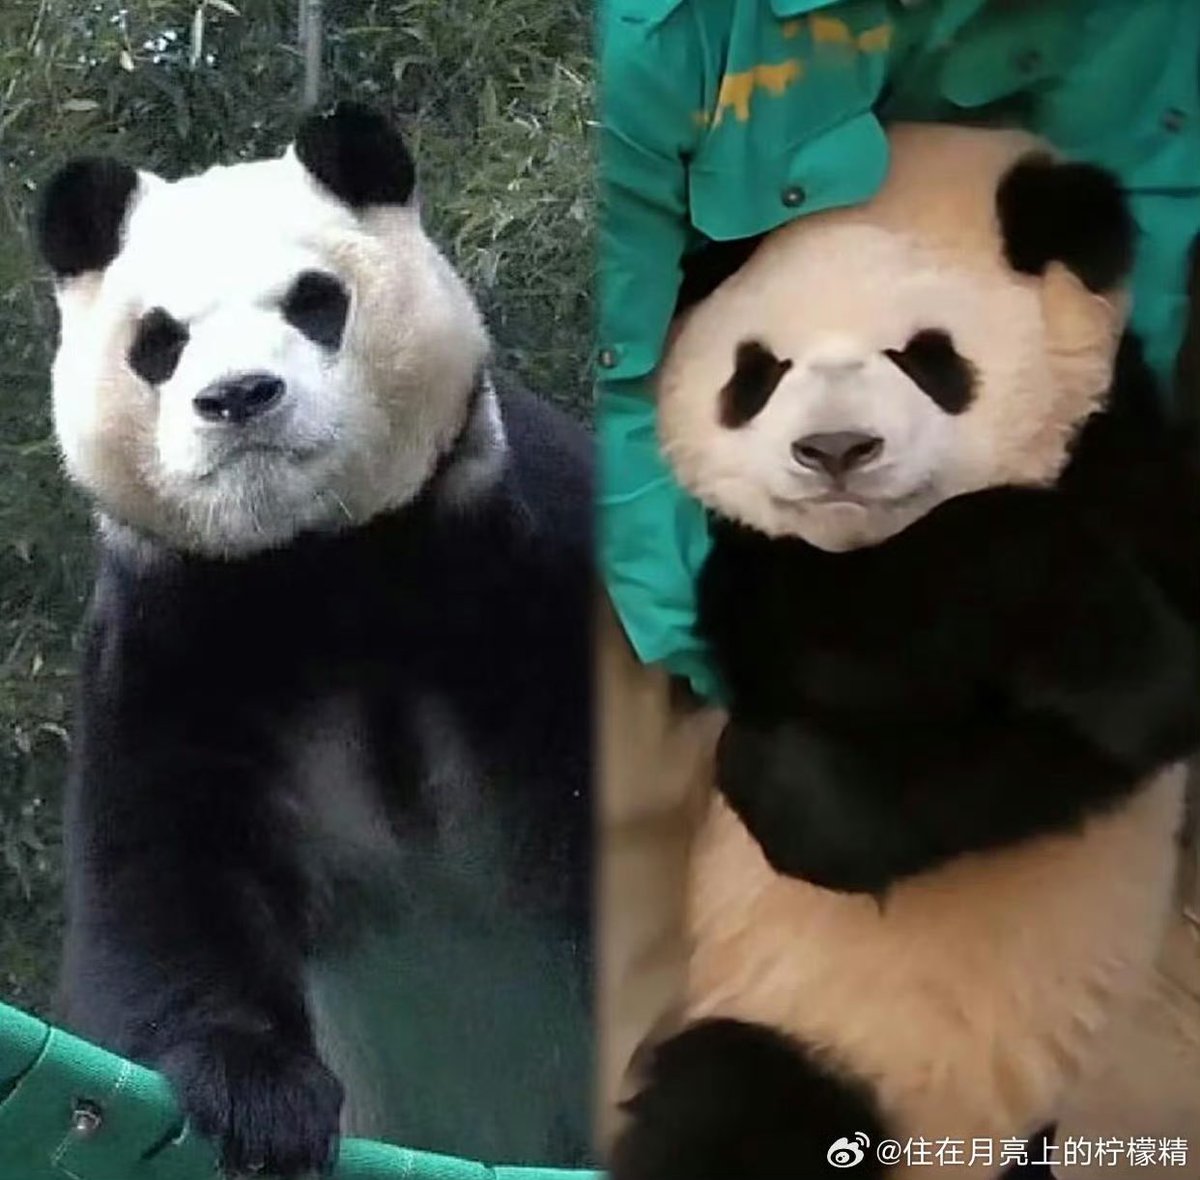 Fubao and Ruibao are the same exactly #fubao #ruibao #fubaopanda #panda